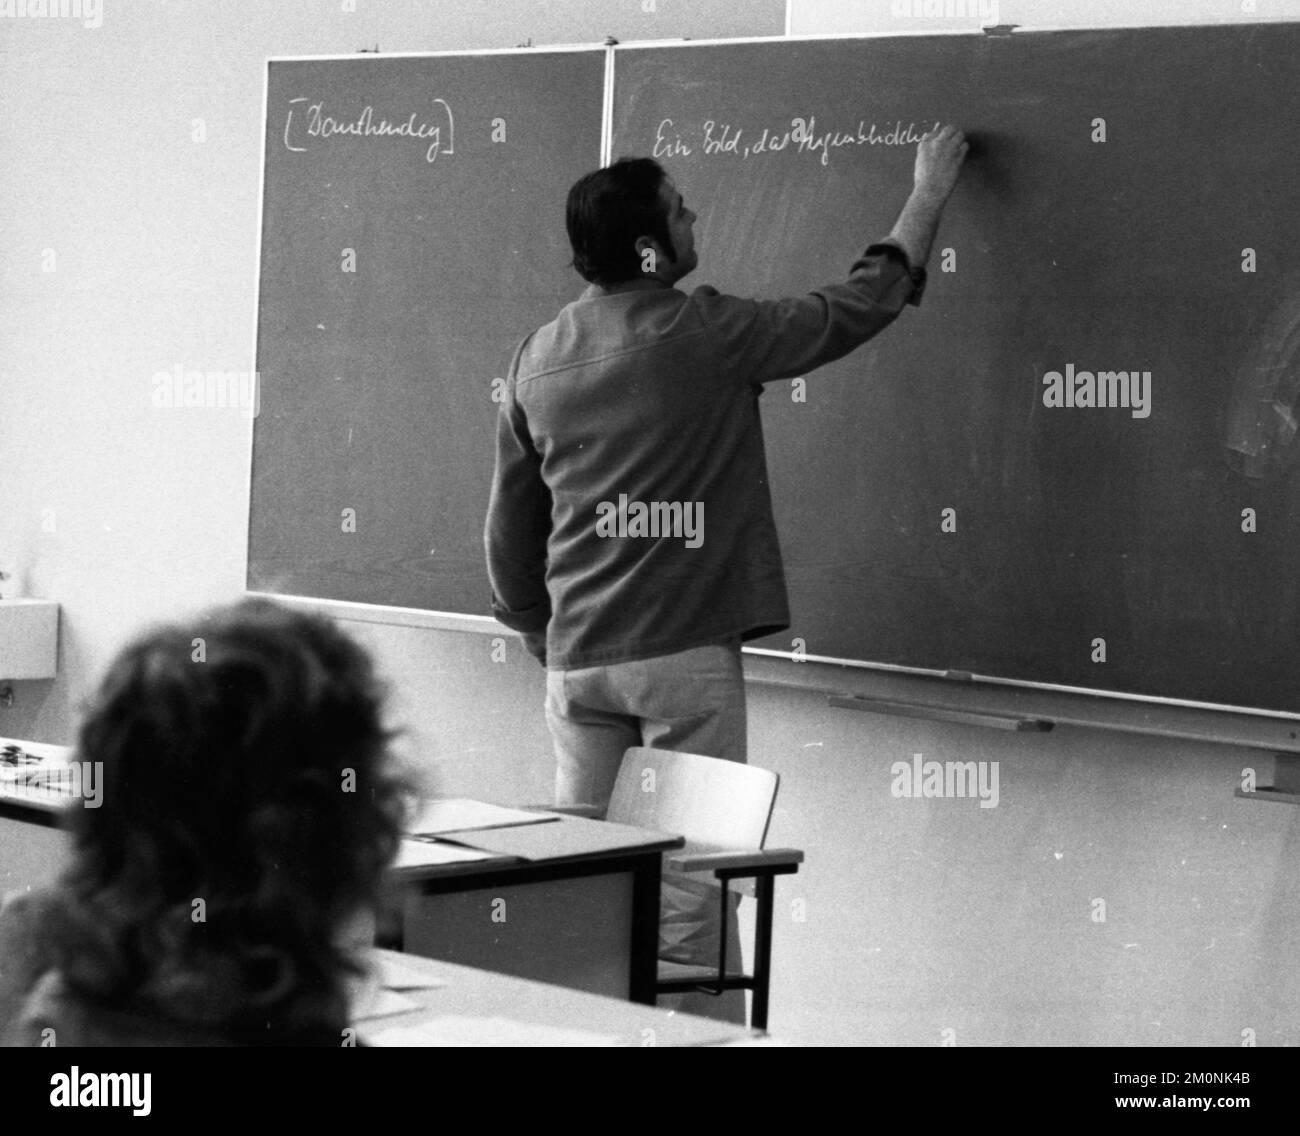 Teaching at a grammar school on 18.6.1974 in Dortmund.subject German, Germany, Europe Stock Photo